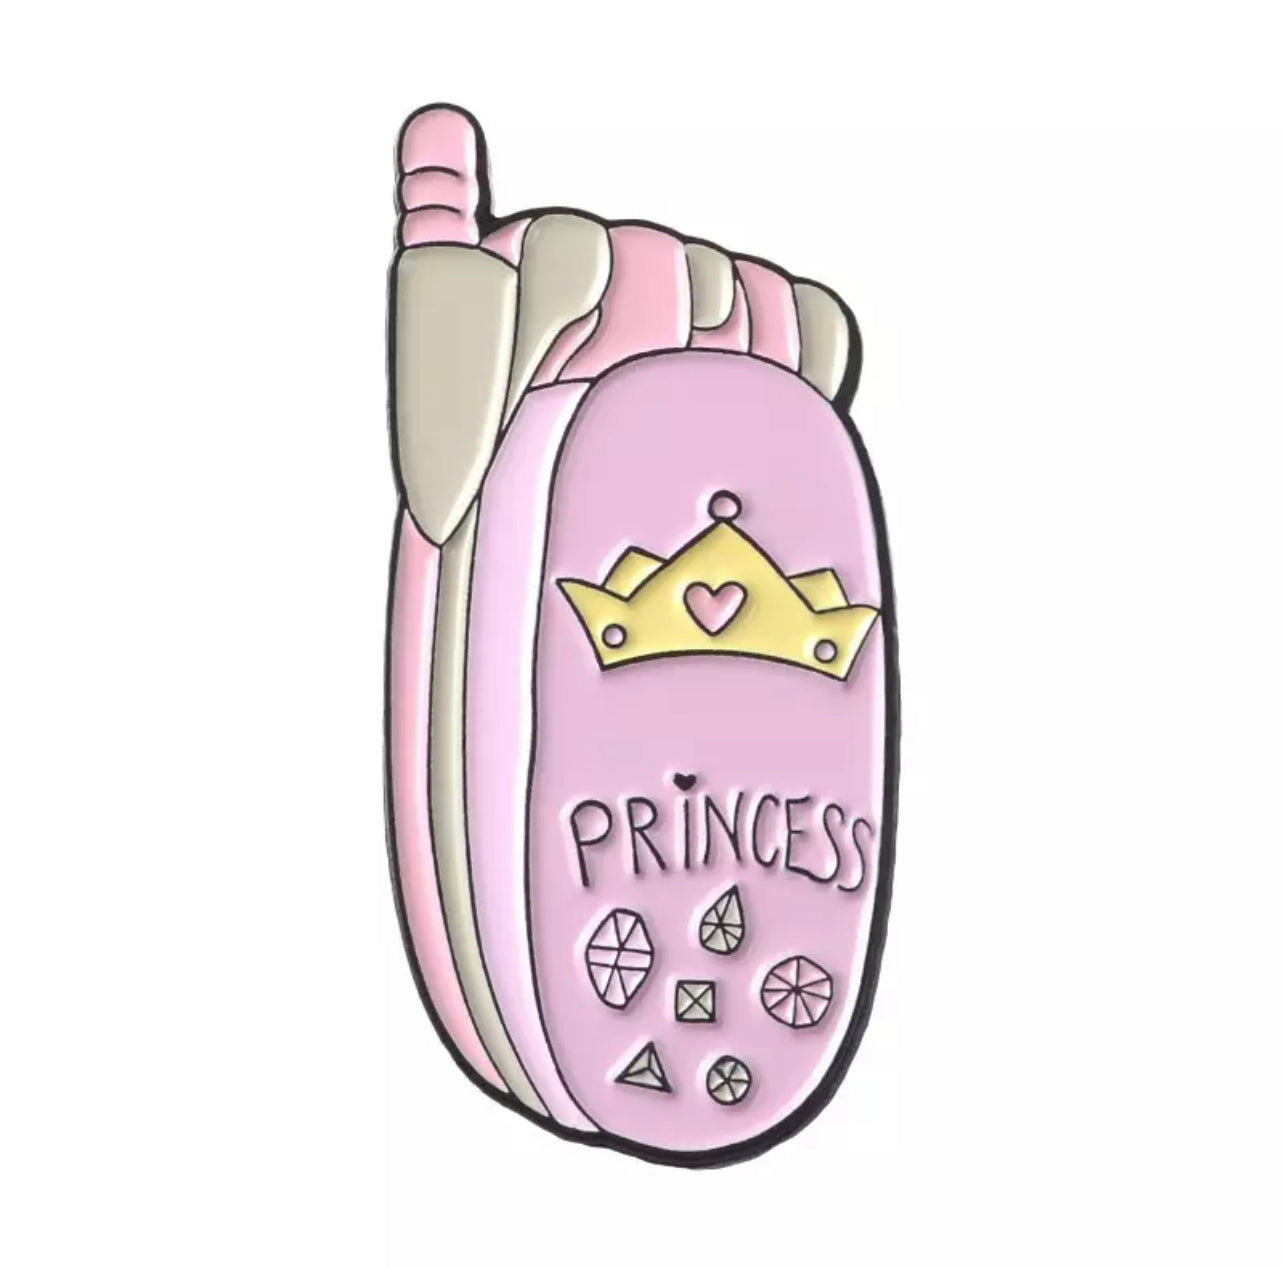 Princess phone